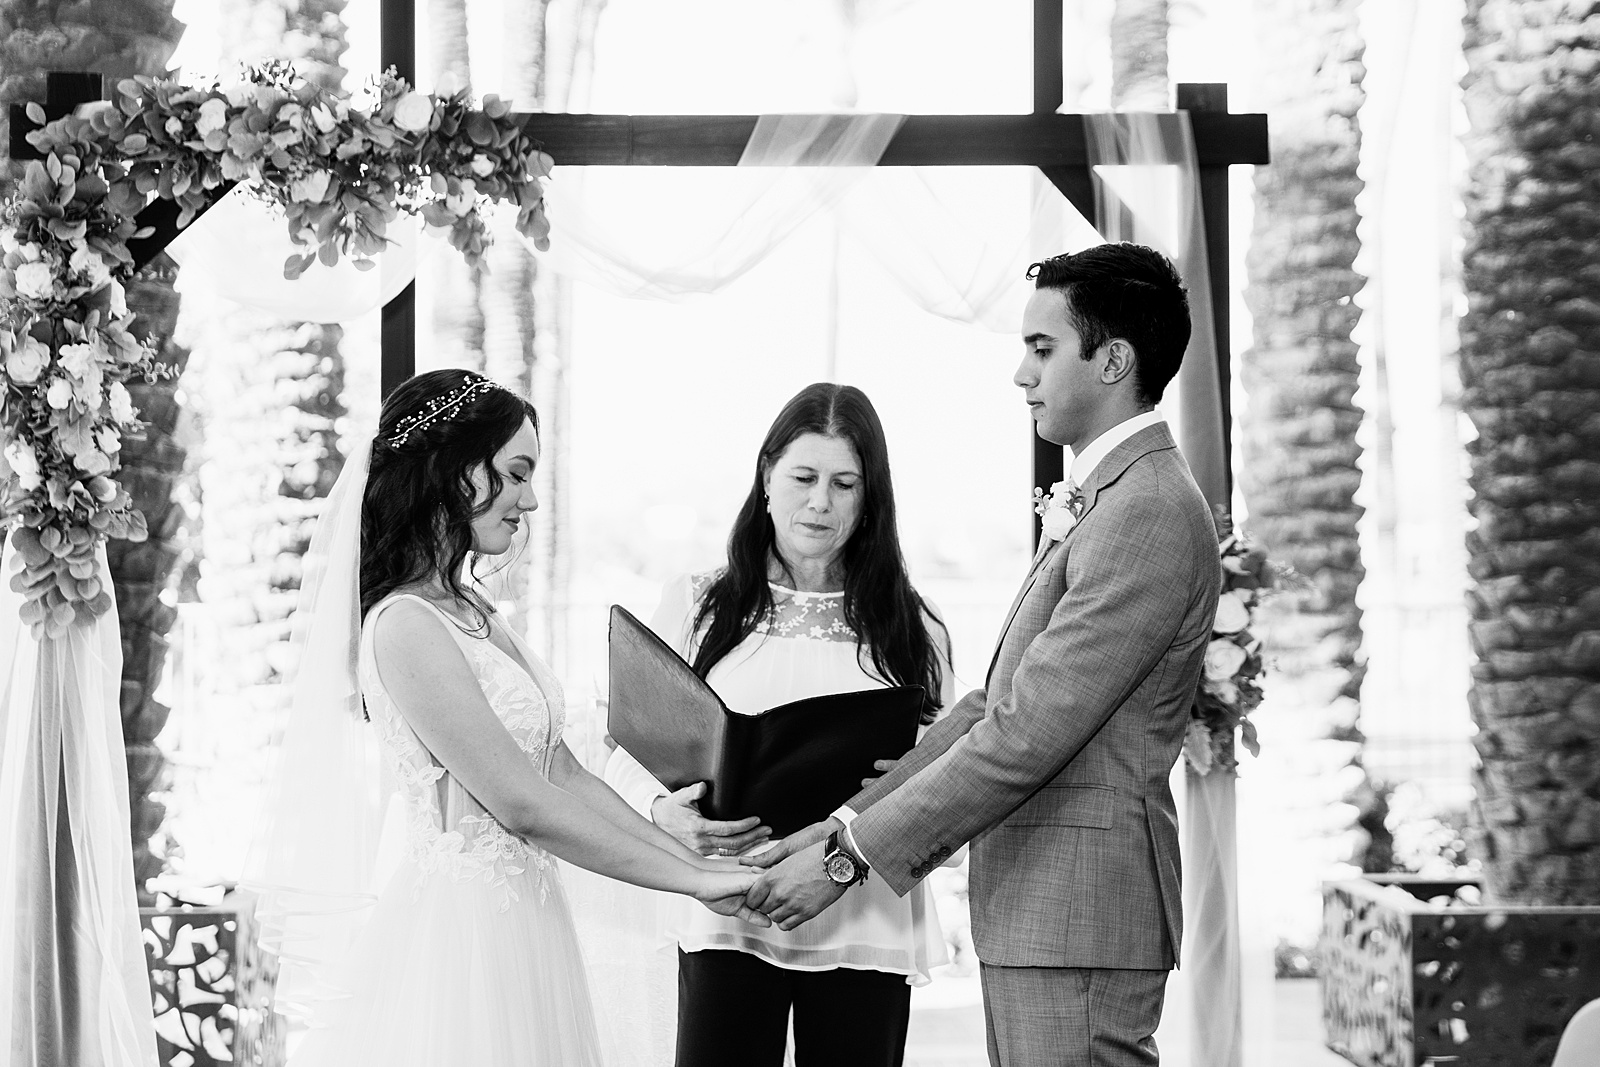 Bride and groom together during Hyatt Regency Scottsdale Resort & Spa At Gainey Ranch wedding ceremony by Scottdsale wedding photographer PMA Photography.